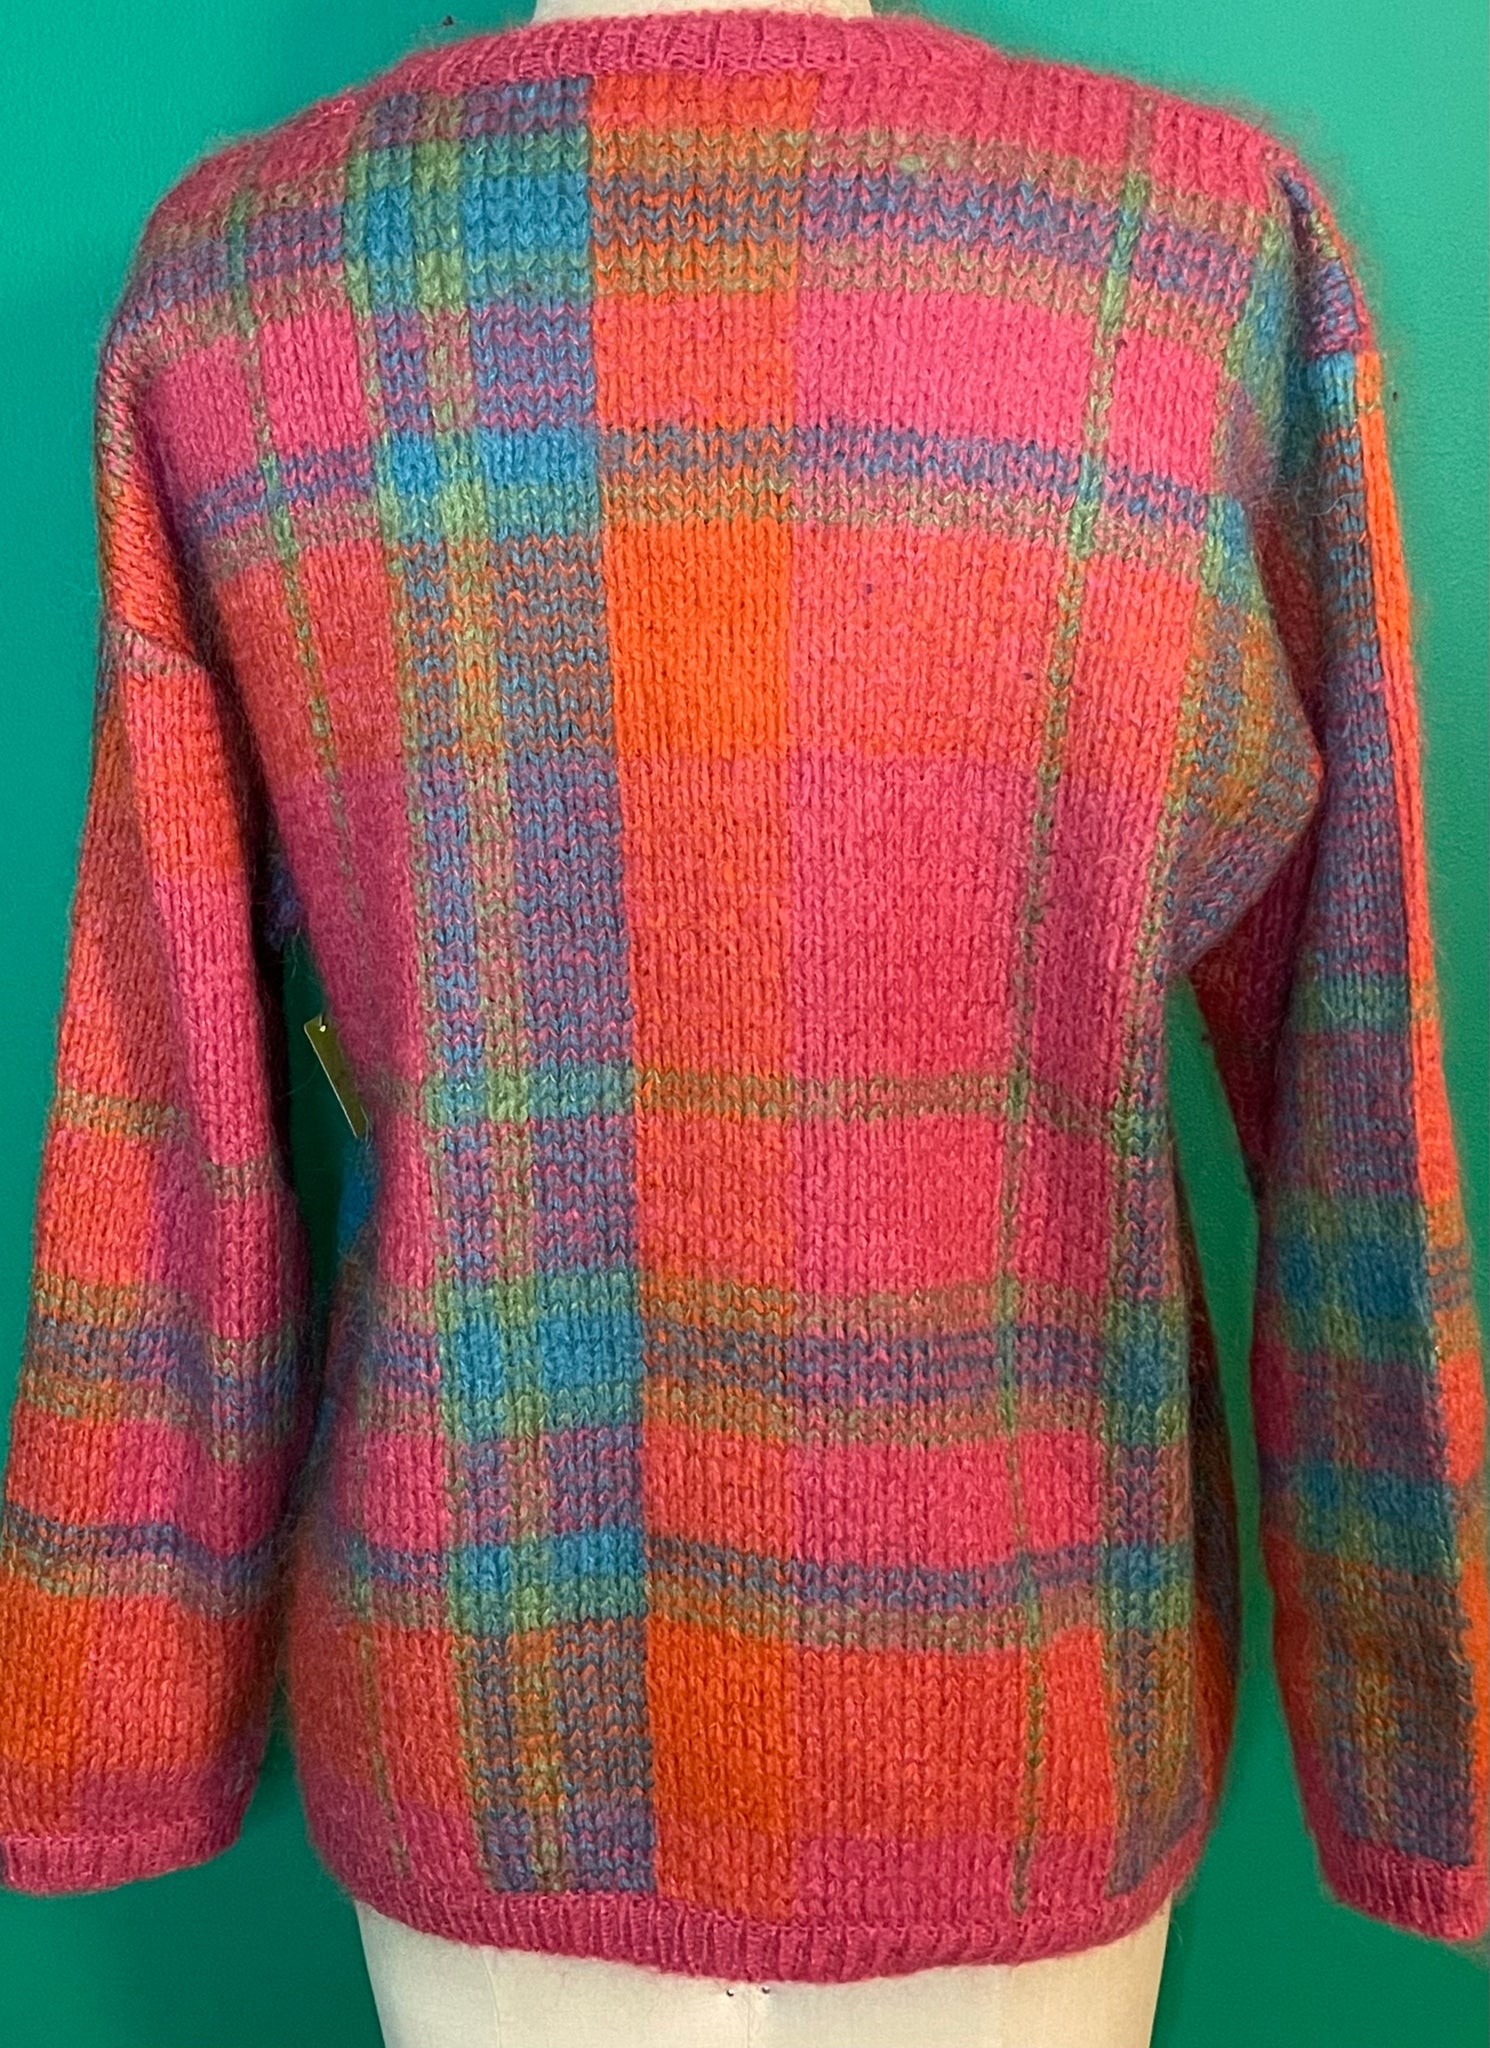 Gallagher Multicolor Sweater (size M)